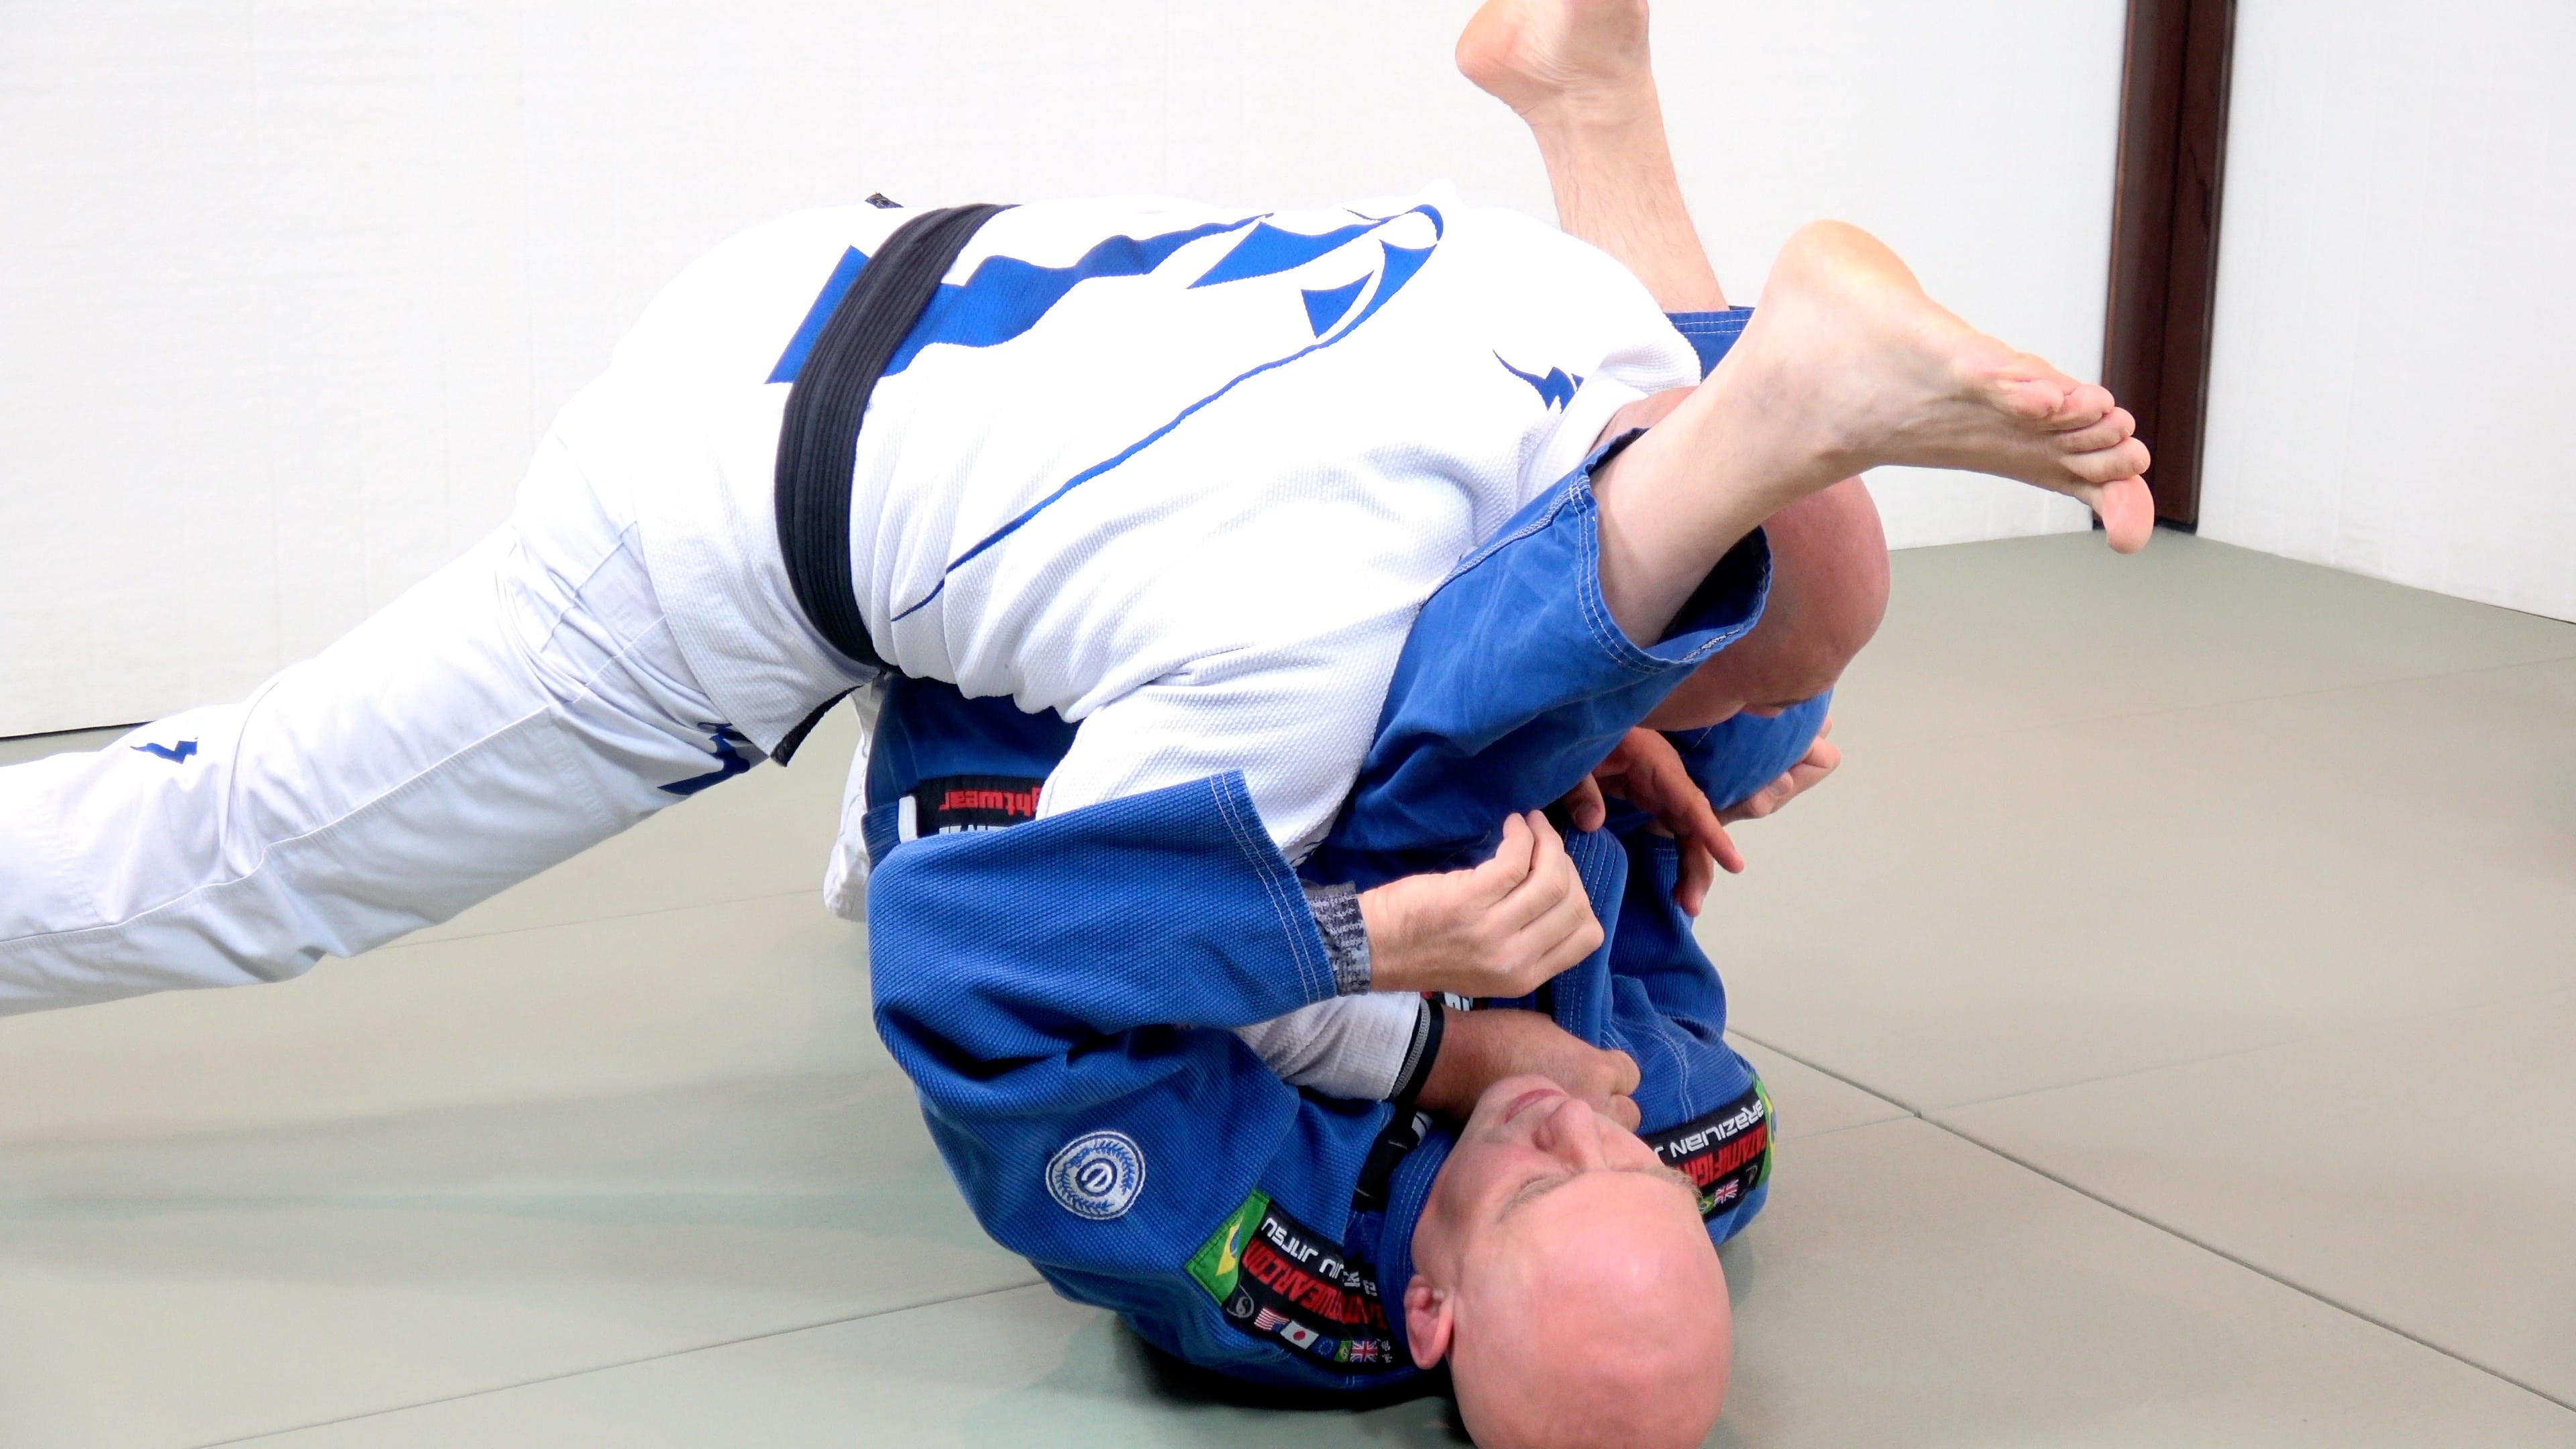 Brazilian Jiu-jitsu: Ground fighting (ne-waza) and submission holds, Taking an opponent to the ground. 3840x2160 4K Wallpaper.